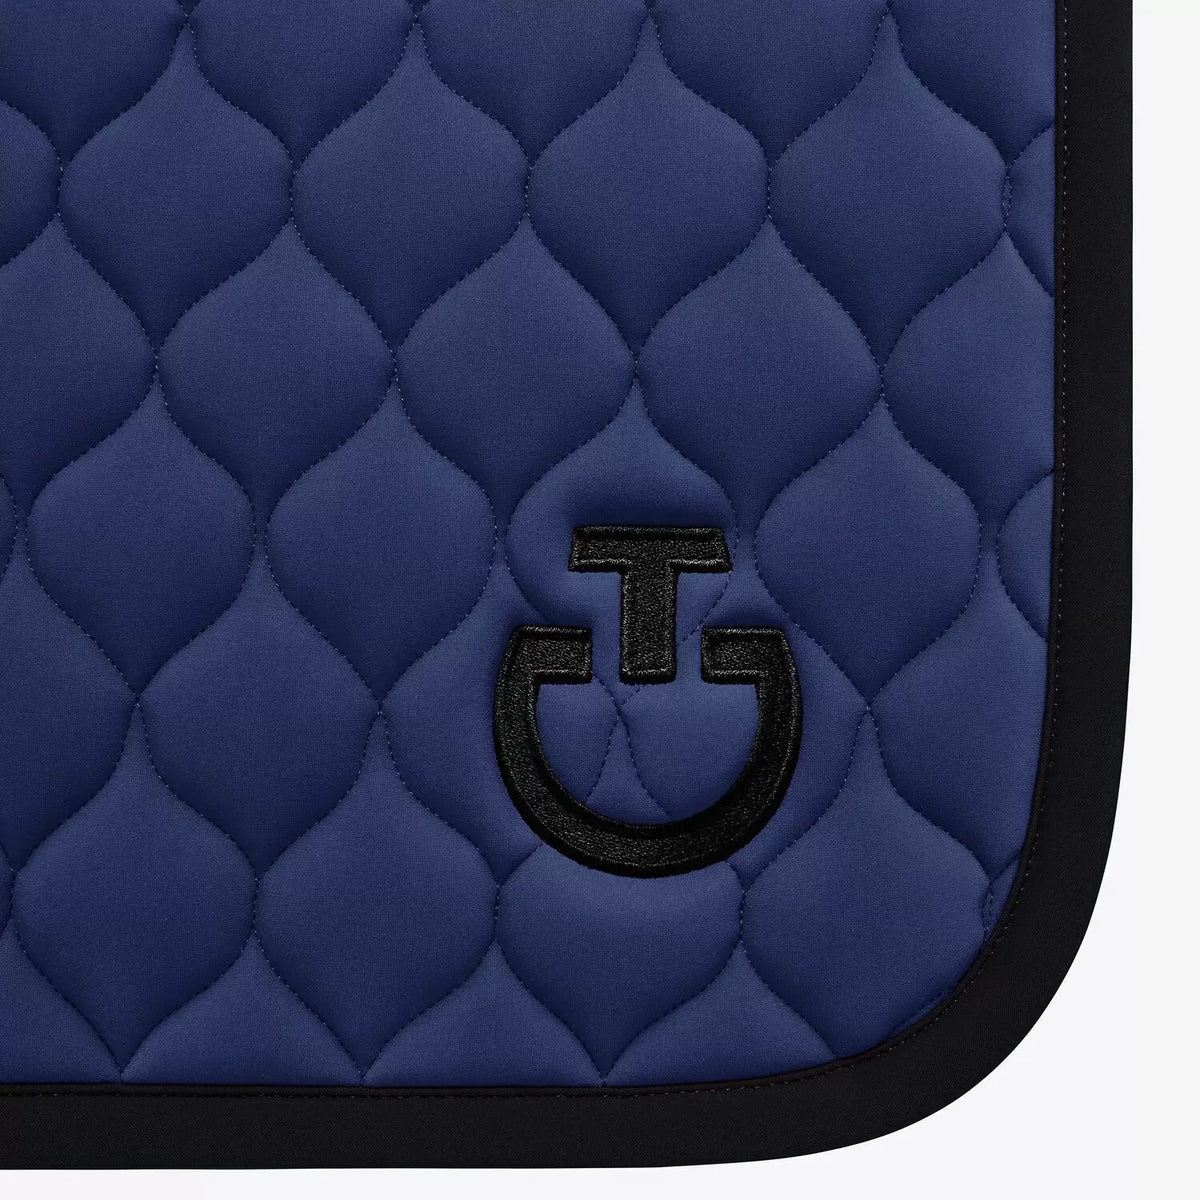 Circular Quilt Jersey Jump Pad - Royal Blue/Black